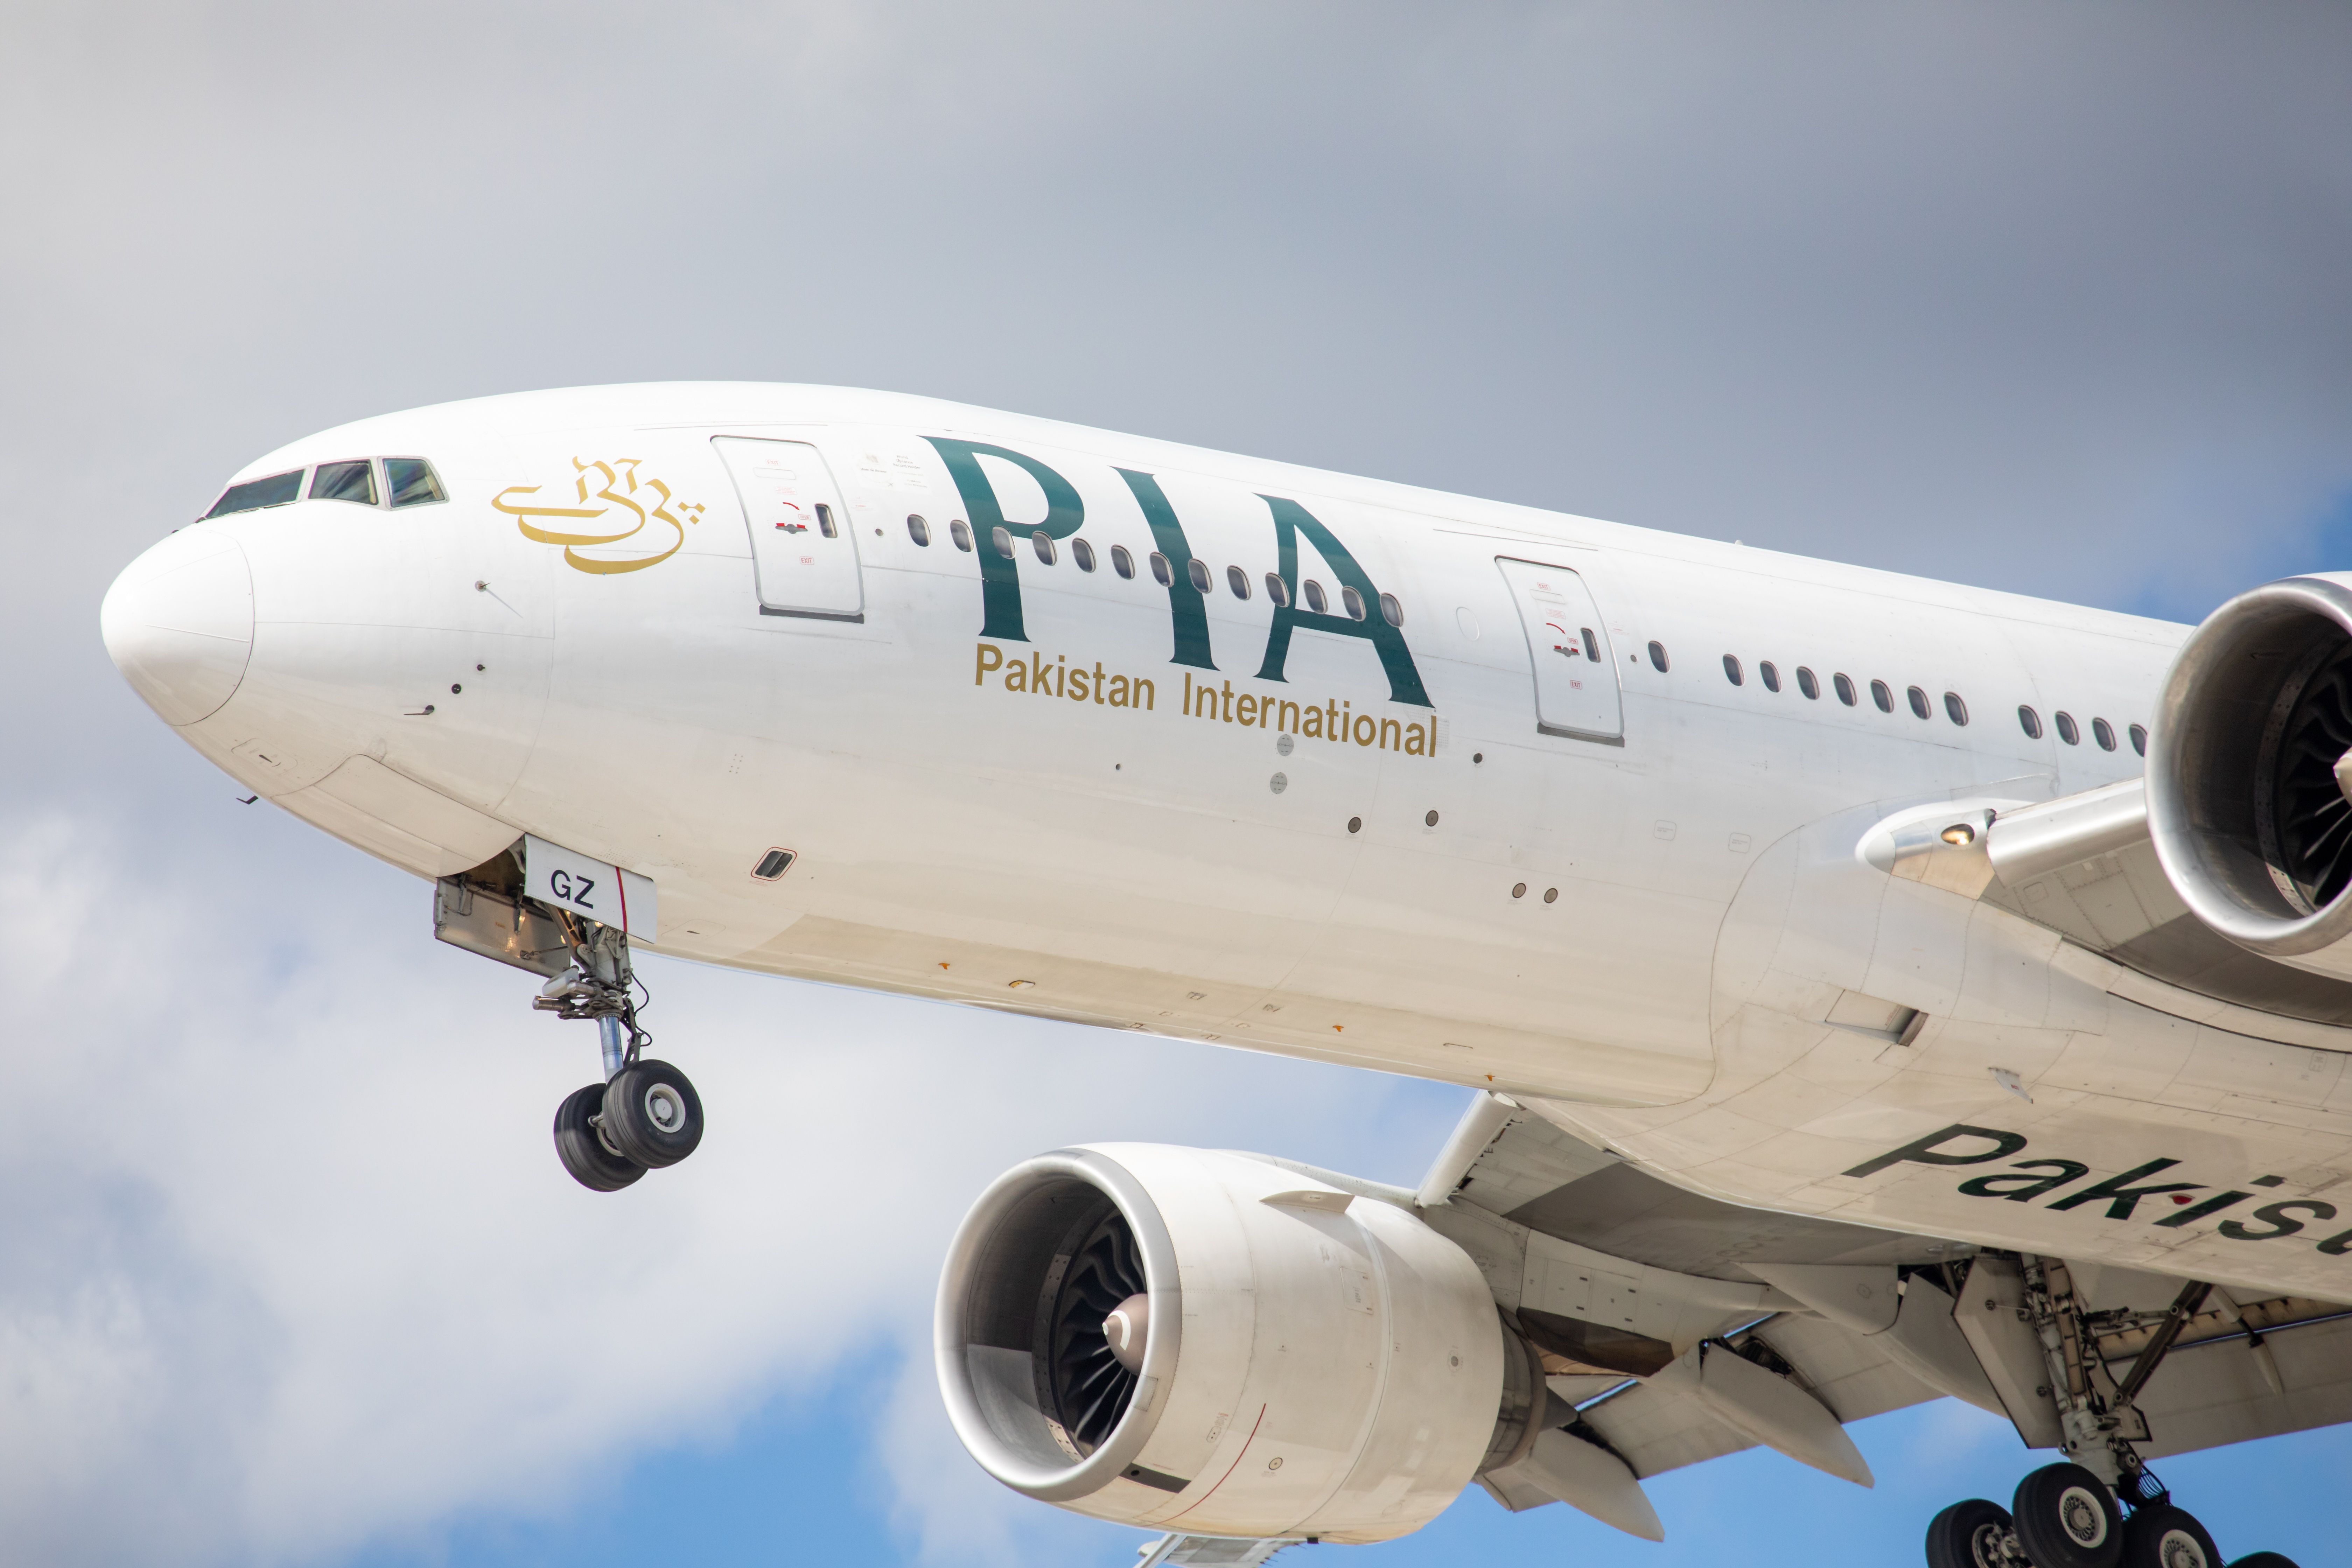 Pakistan International Airlines (PIA) Boeing 777